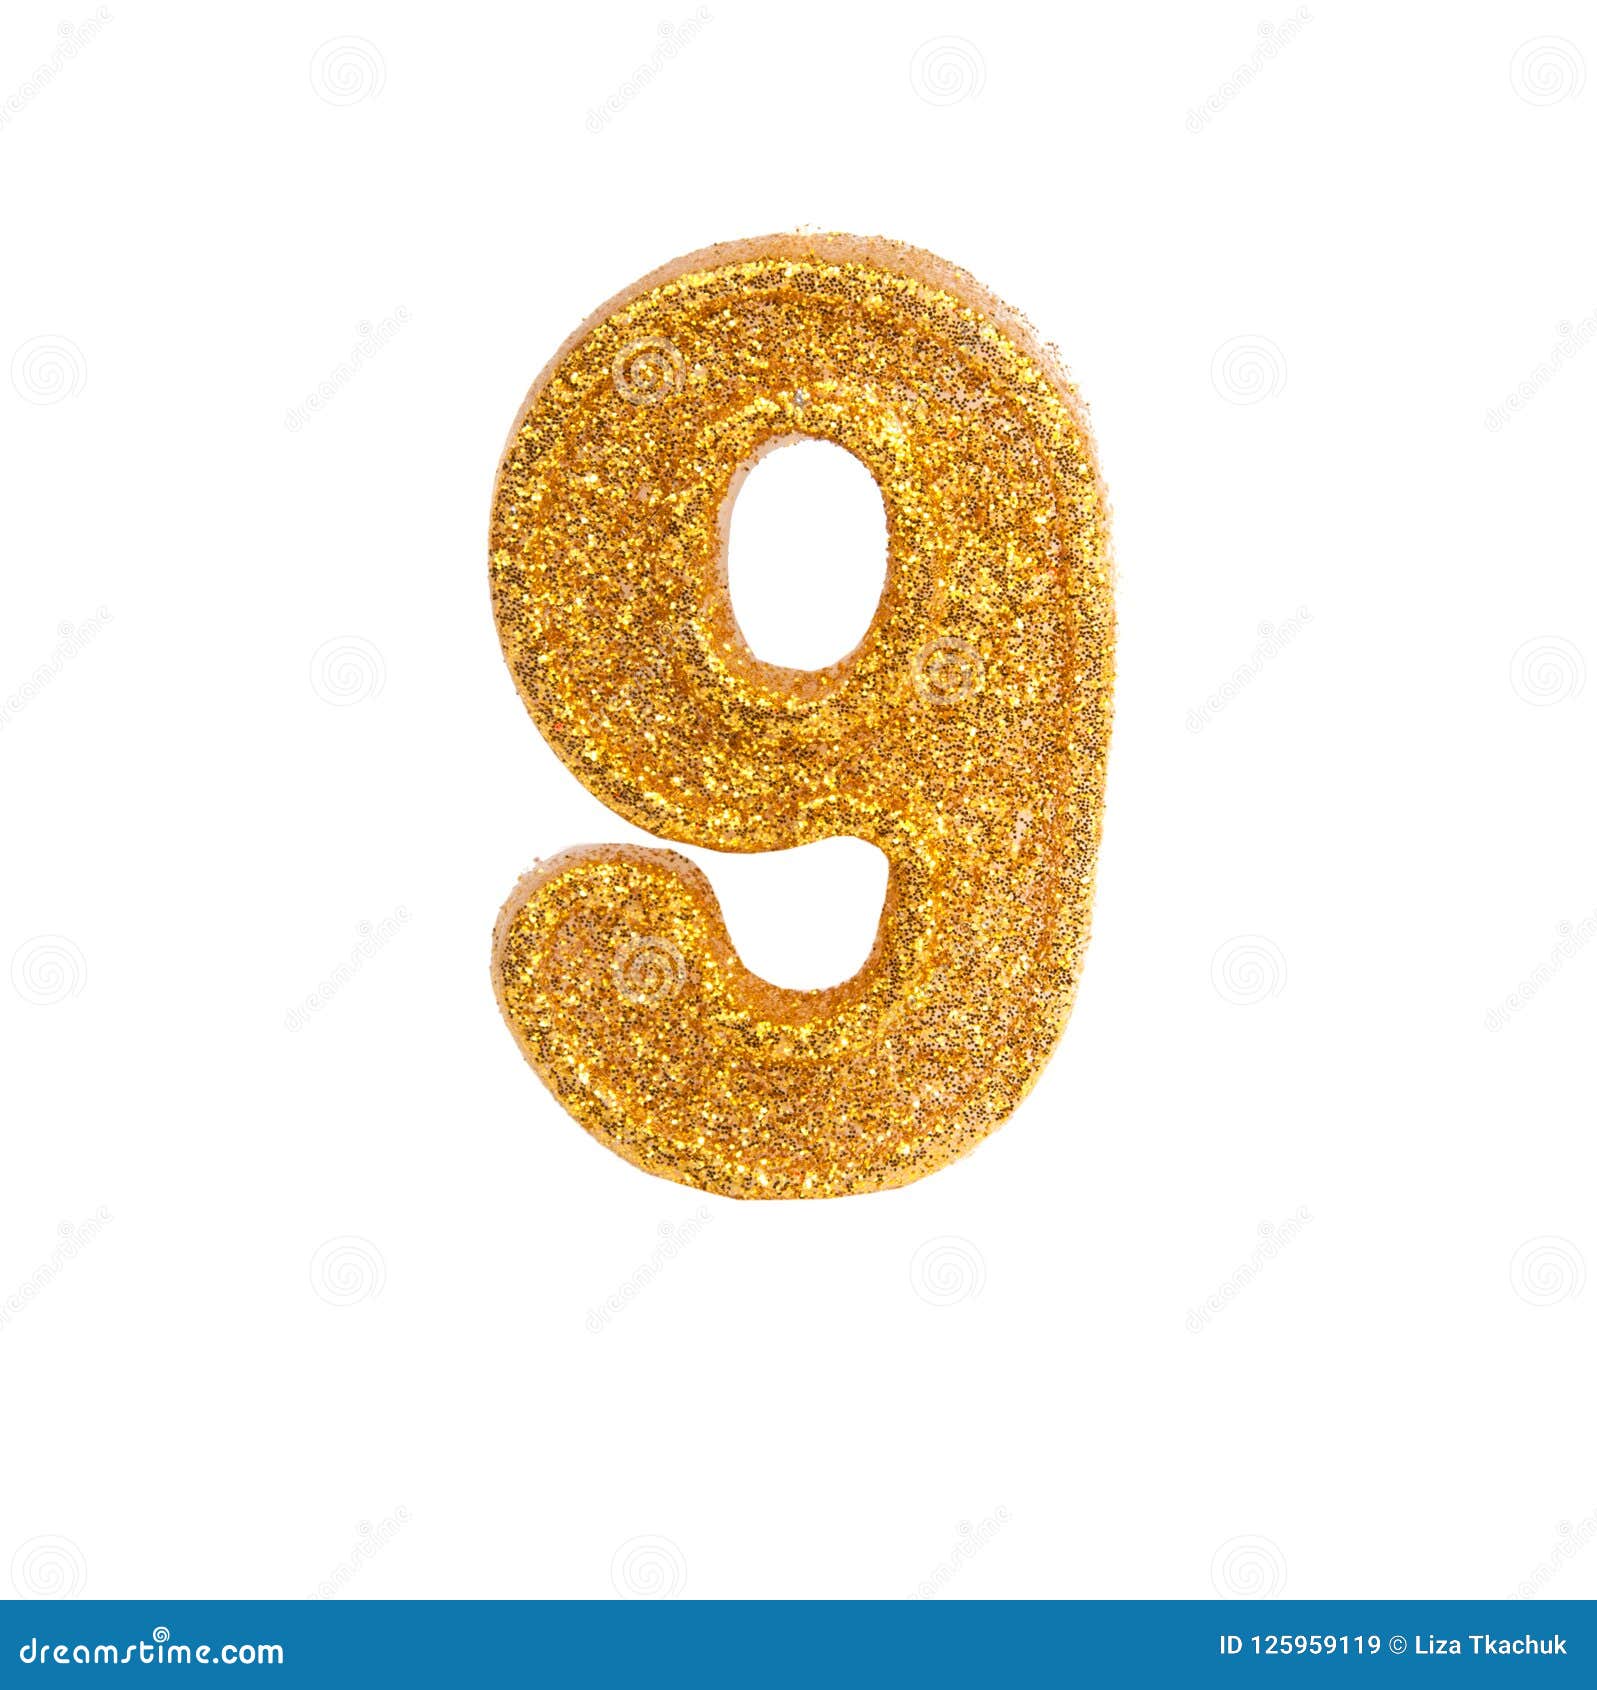 Photo of Golden Decorative Number Stock Image - Image of decorative ...